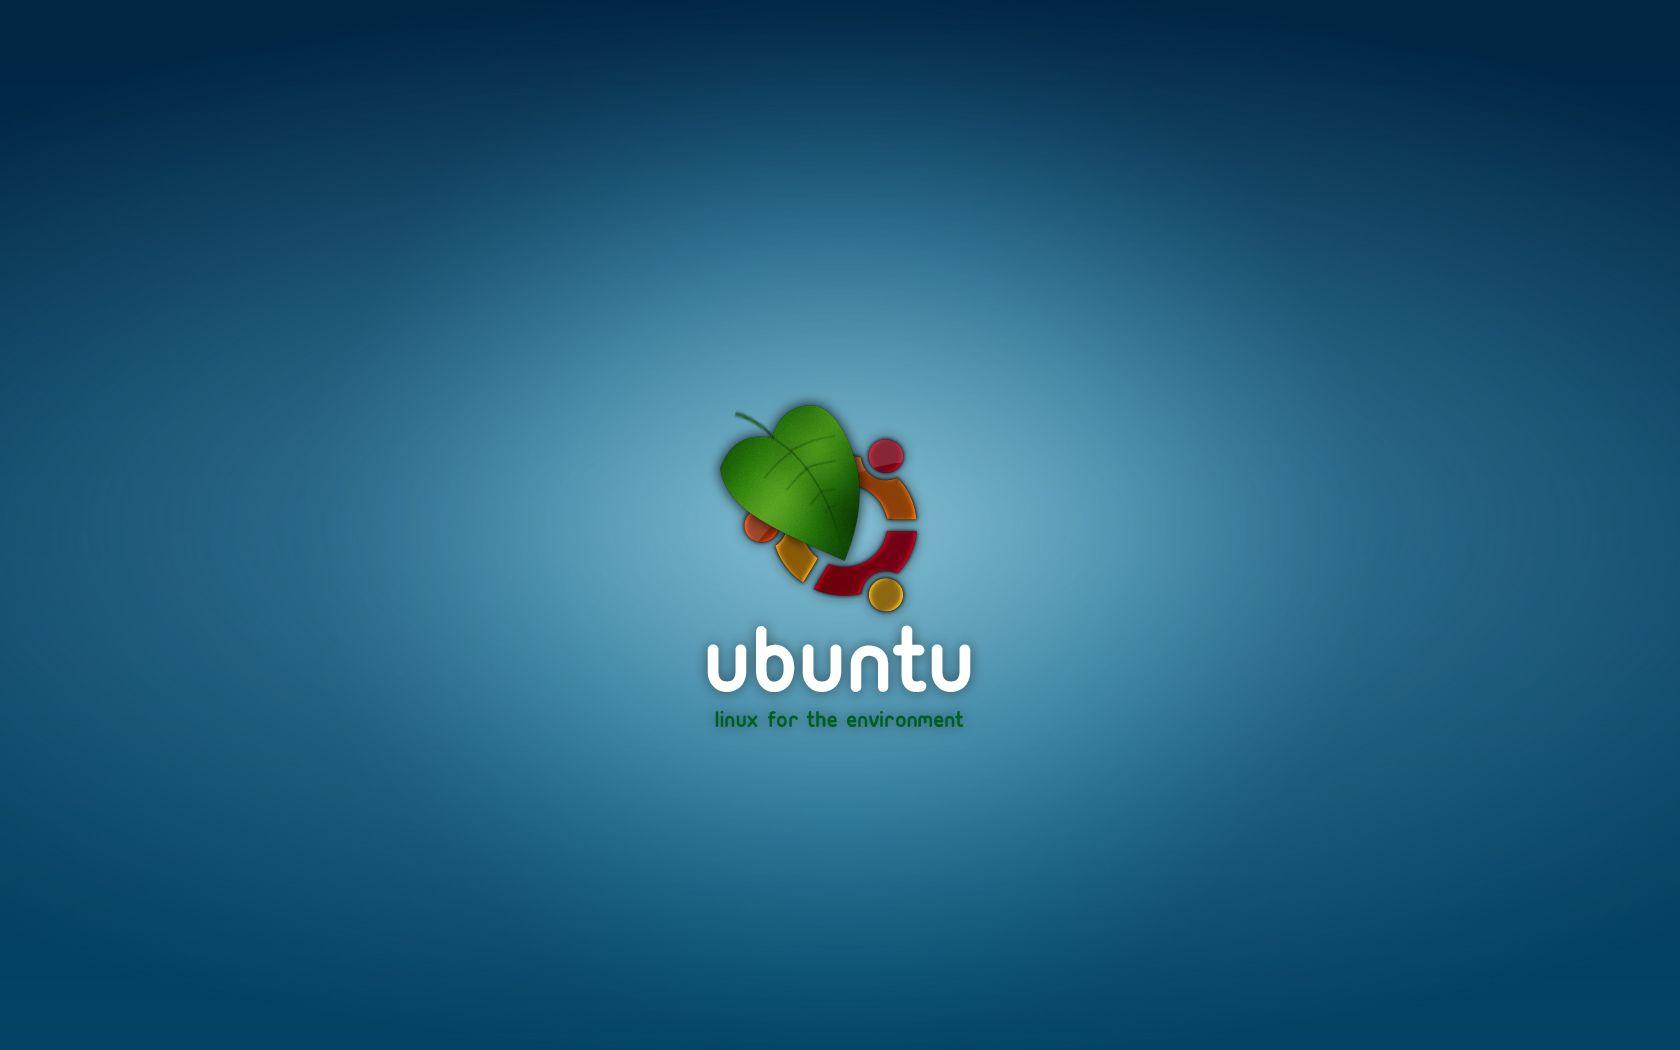 Ubuntu Linux Wallpapers